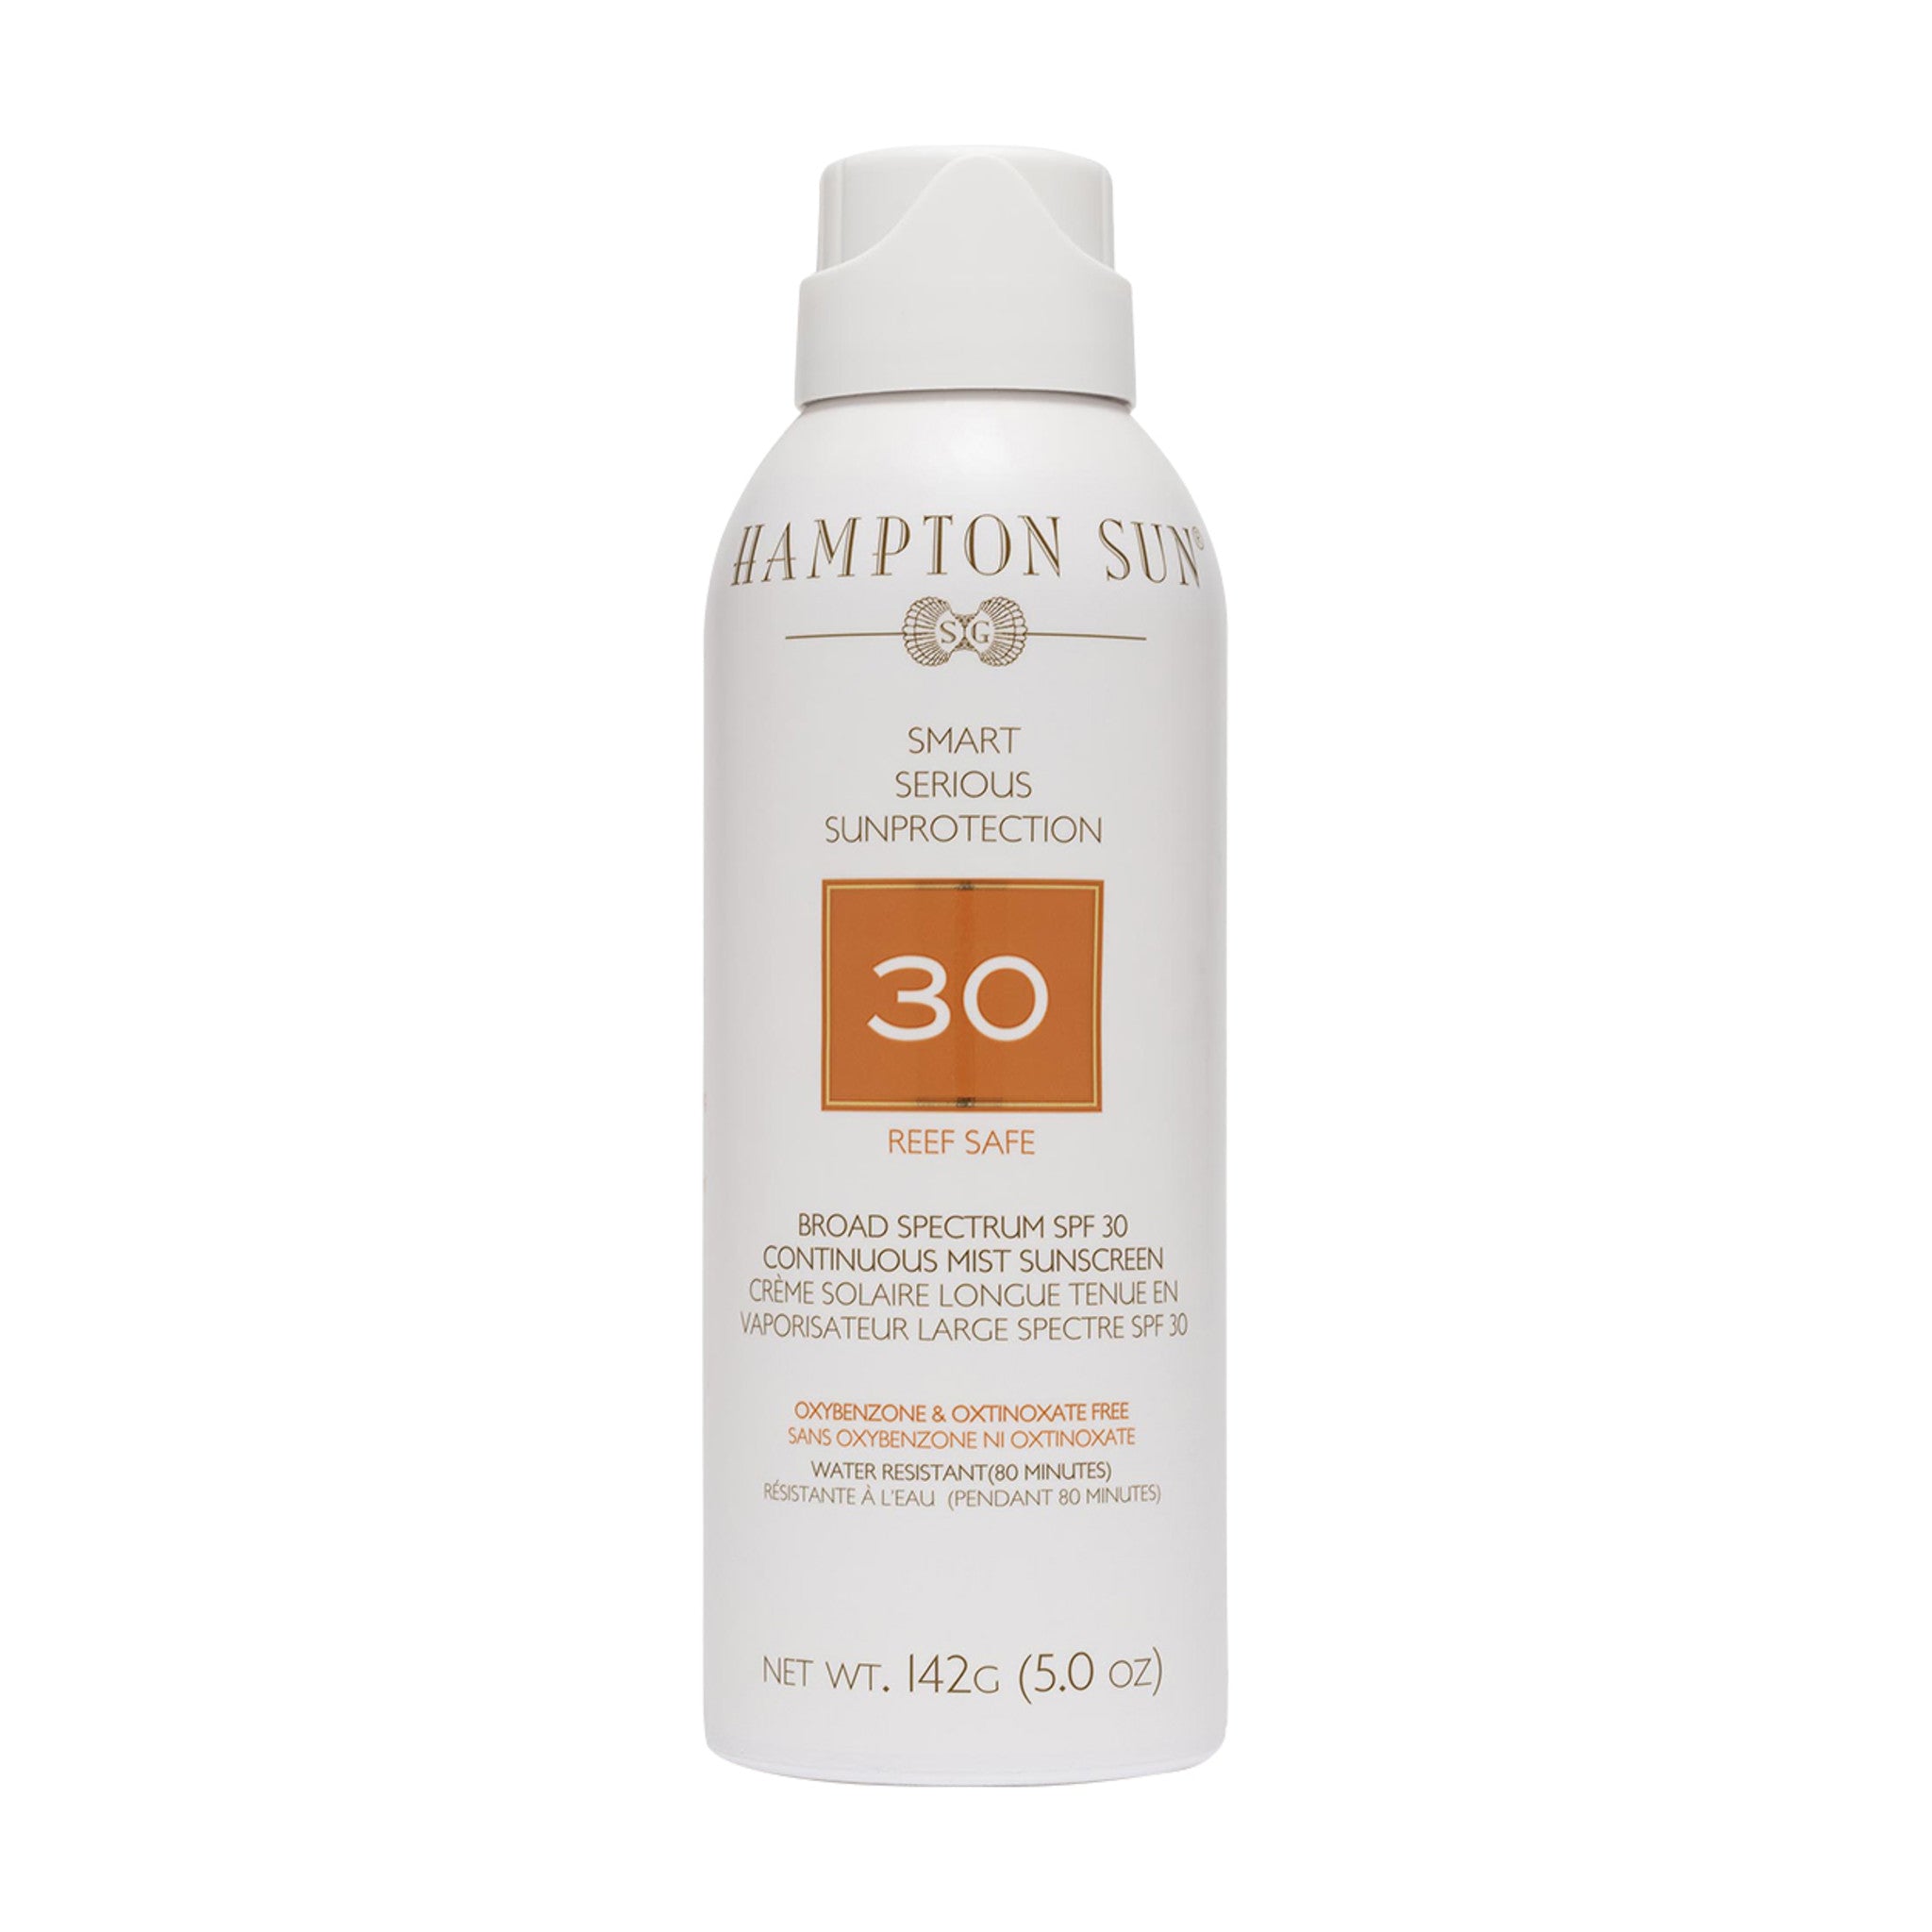 Hampton Sun Continuous Mist Sunscreen SPF 30 Size variant: 5 oz main image.